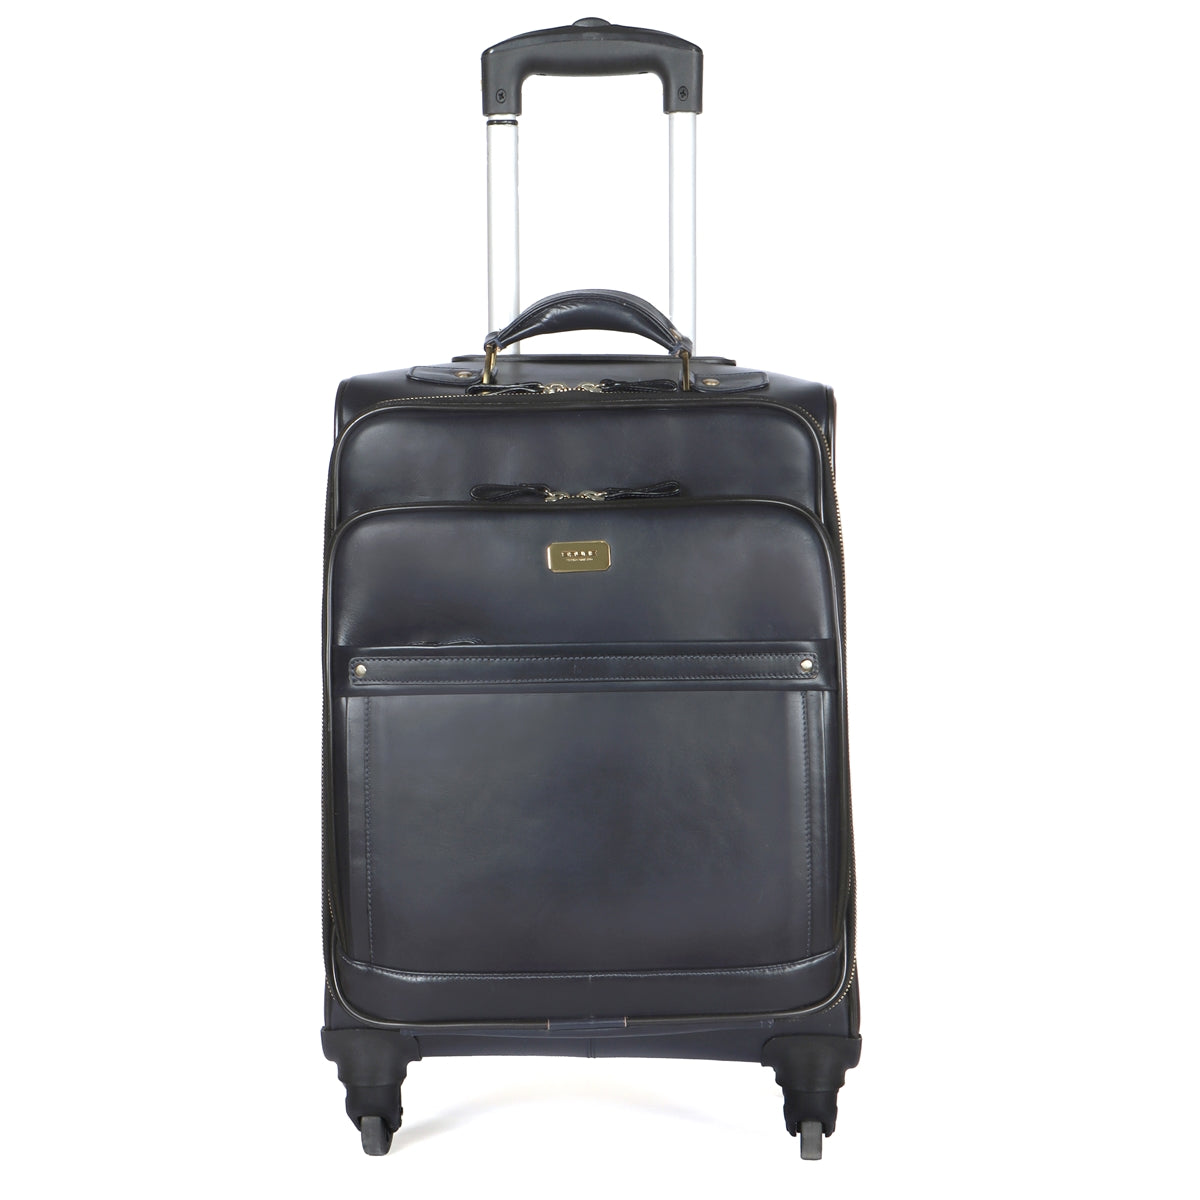 Grey Leather Golden Zipper Spinner Luggage Wheel Strolley Travel Bag